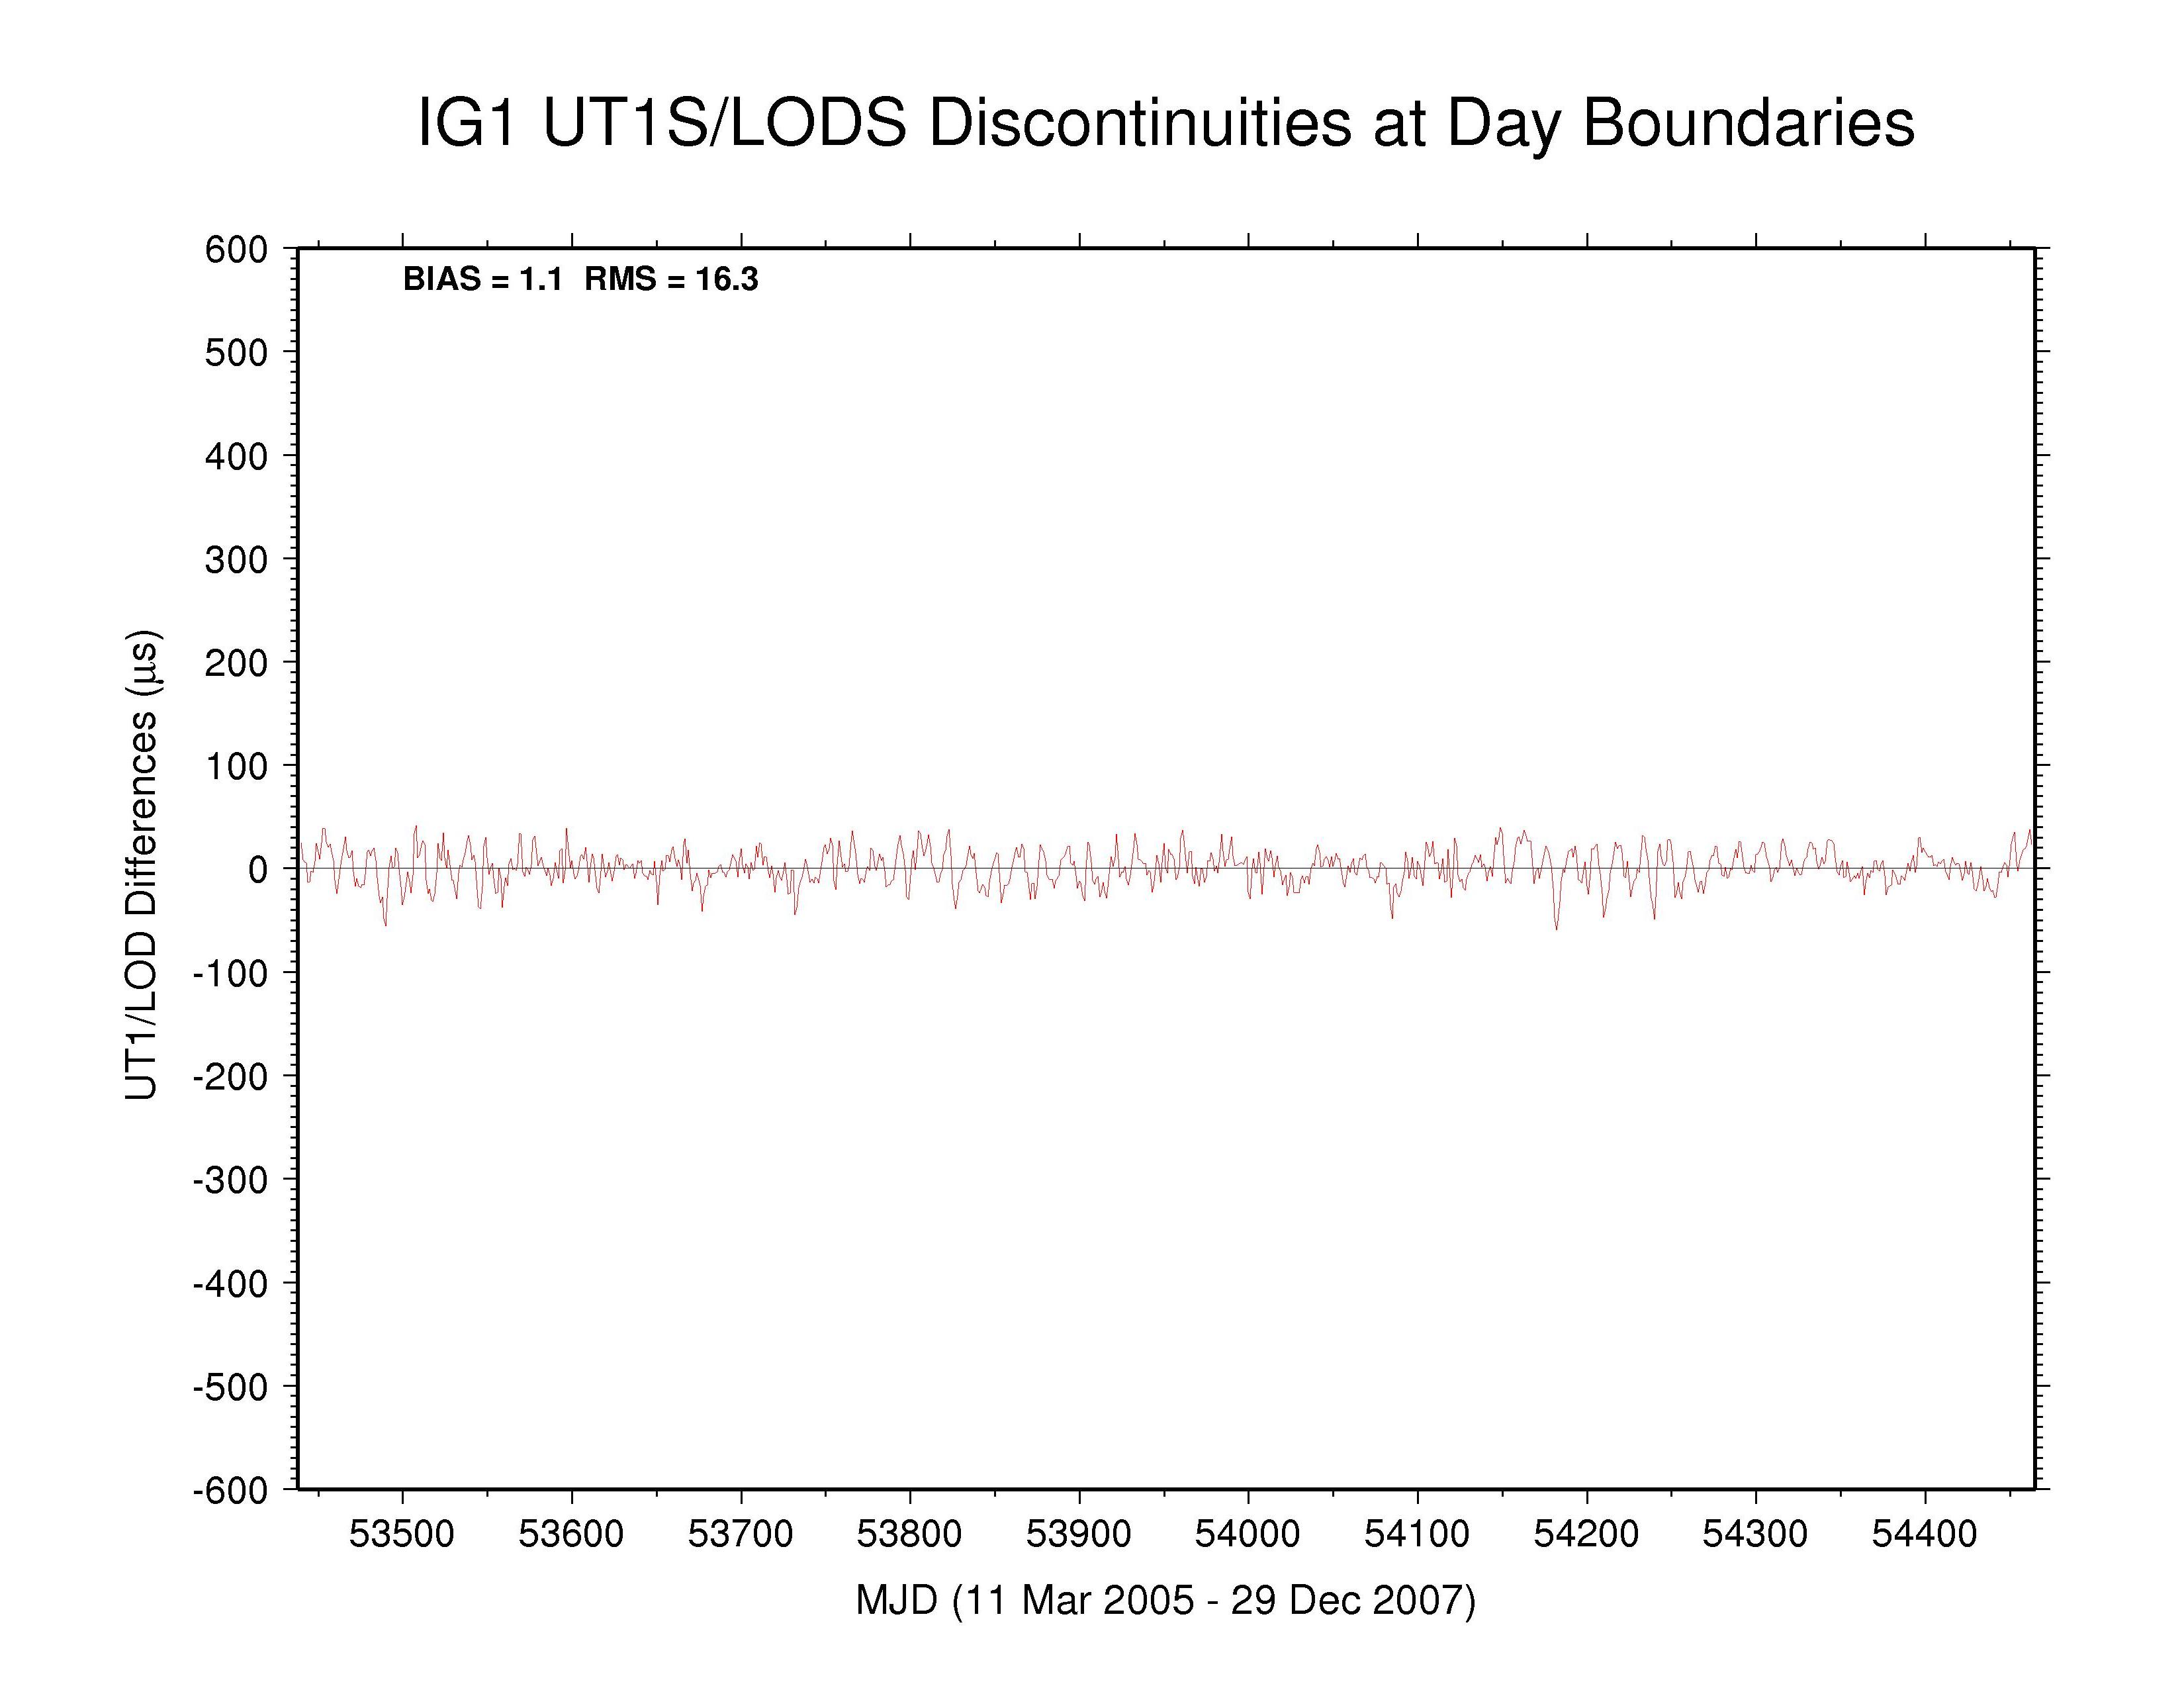 IGS LOD discontinuities